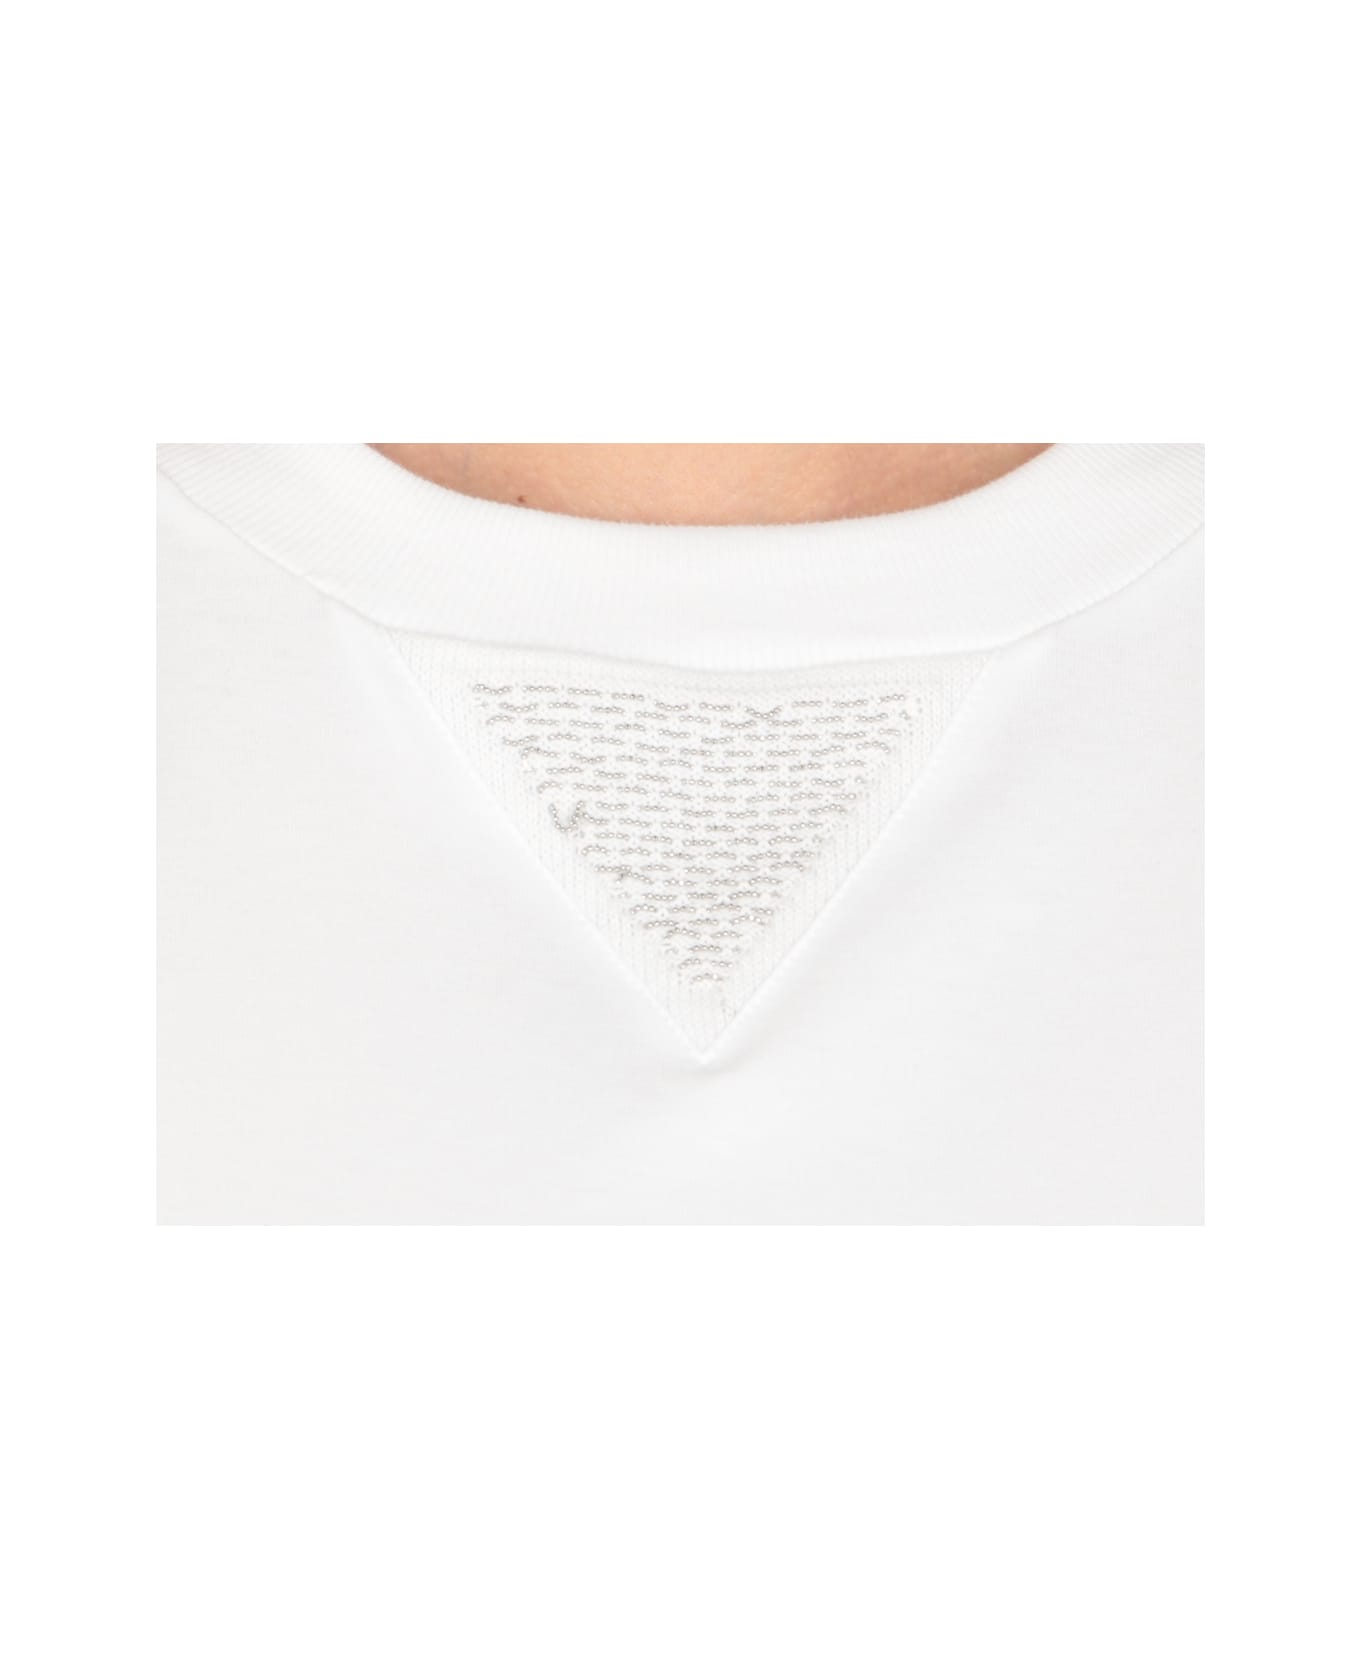 Peserico Cotton Midi Dress - Bianco